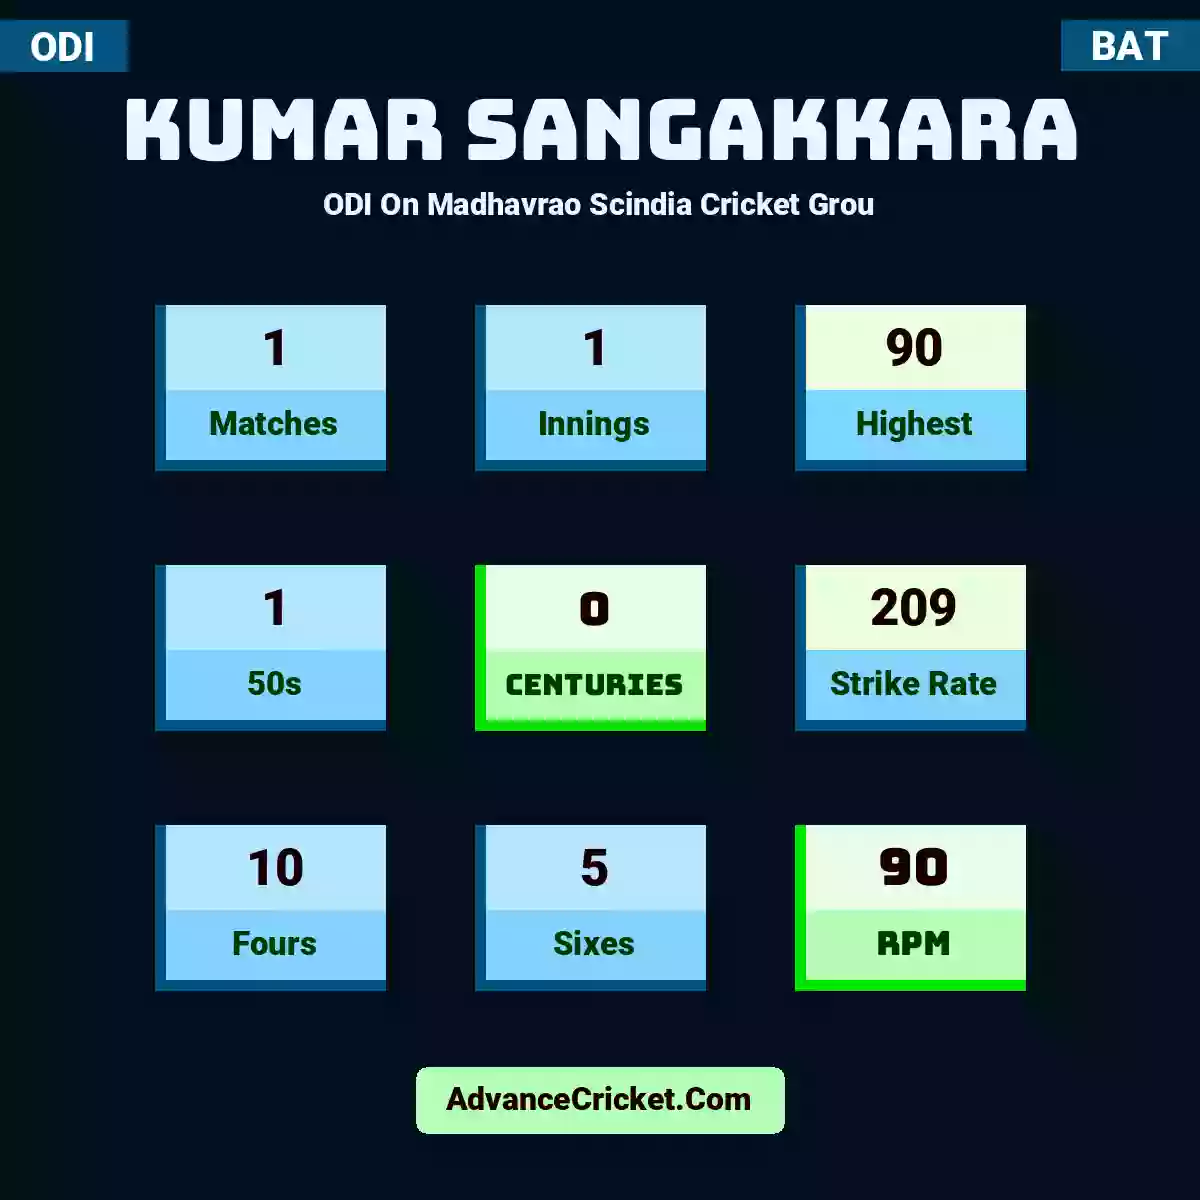 Kumar Sangakkara ODI  On Madhavrao Scindia Cricket Grou, Kumar Sangakkara played 1 matches, scored 90 runs as highest, 1 half-centuries, and 0 centuries, with a strike rate of 209. K.Sangakkara hit 10 fours and 5 sixes, with an RPM of 90.